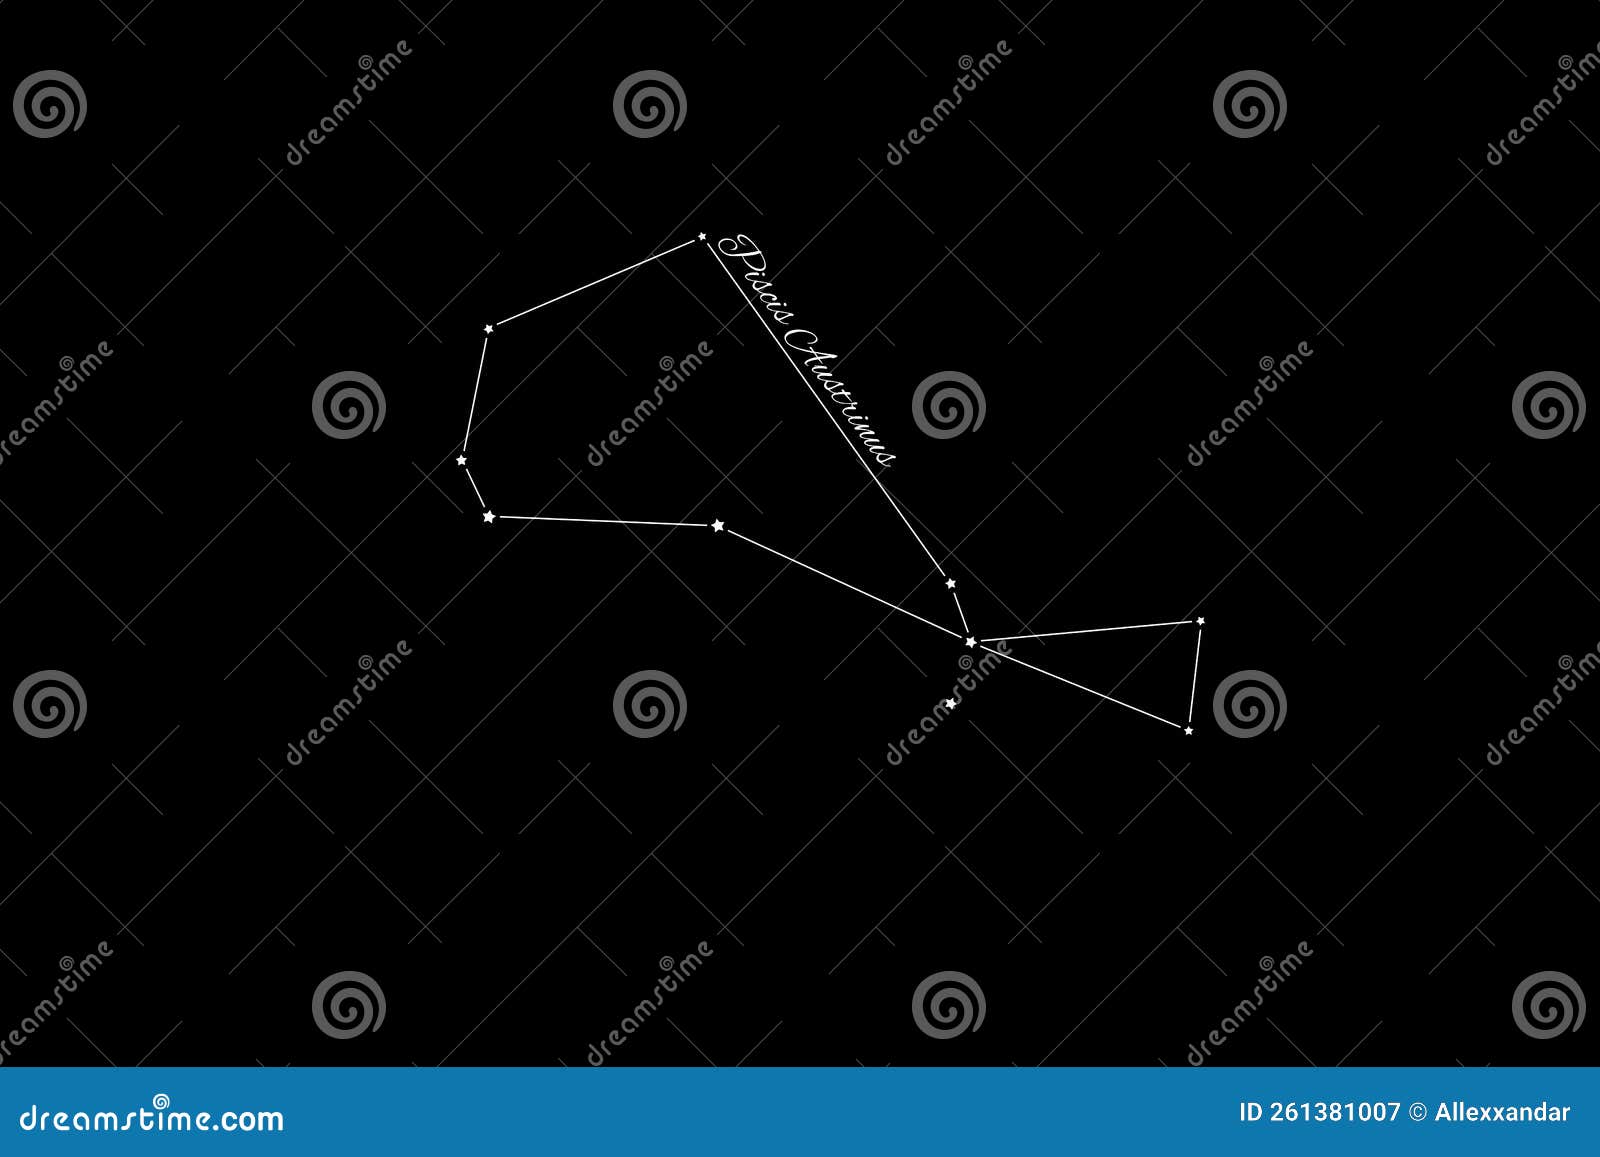 piscis austrinus constellation, cluster of stars, southern fish constellation